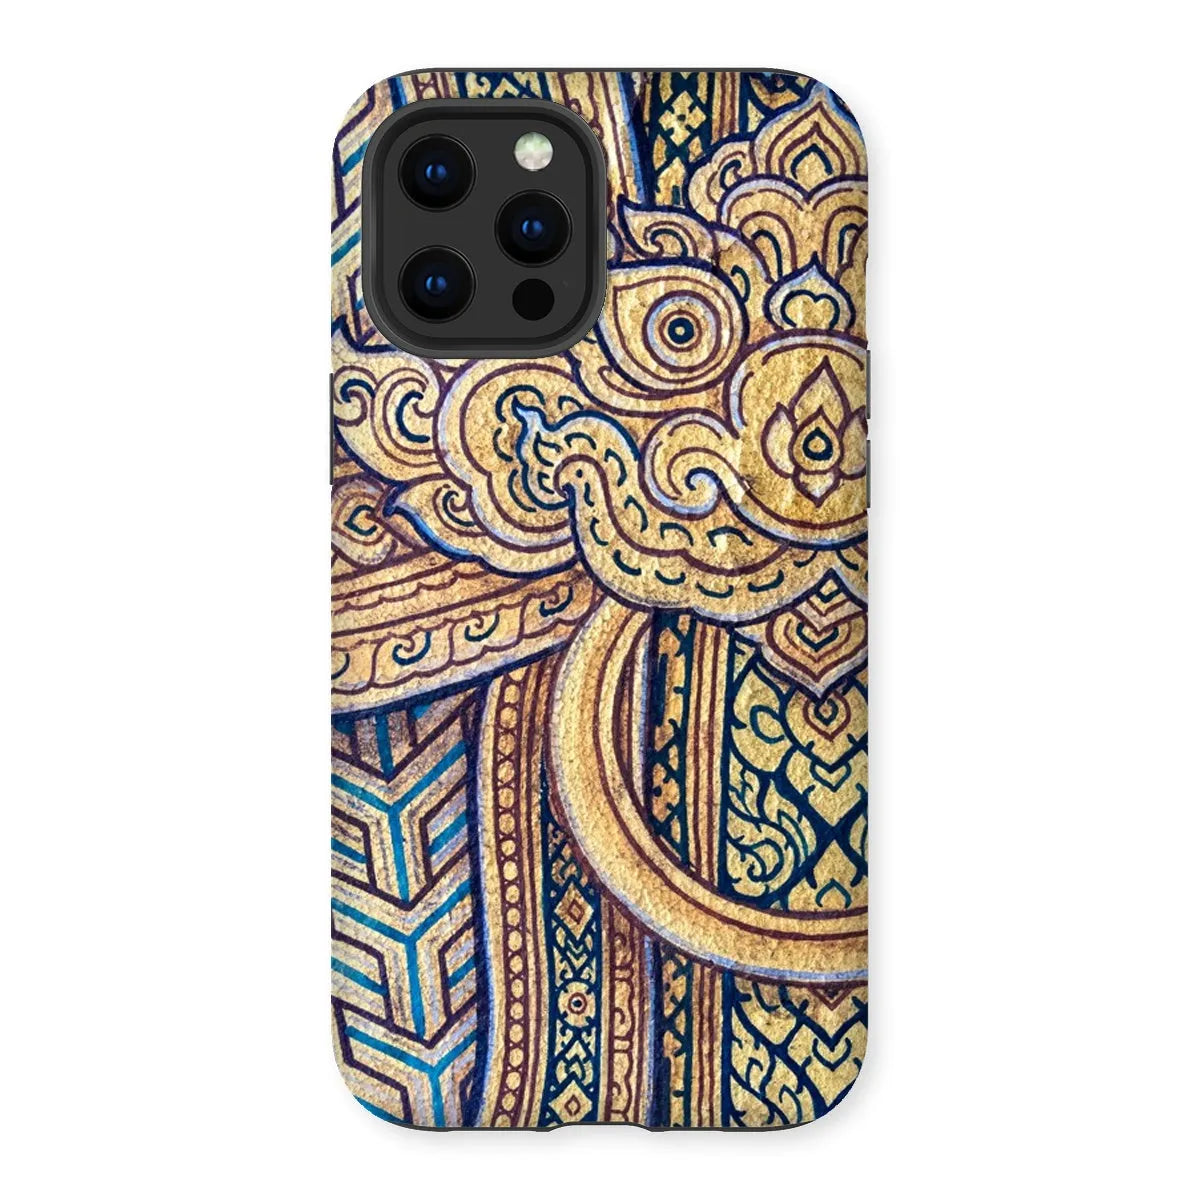 Man’s Best Friend - Thai Aesthetic Art Phone Case - Iphone 13 Pro Max / Matte - Mobile Phone Cases - Aesthetic Art